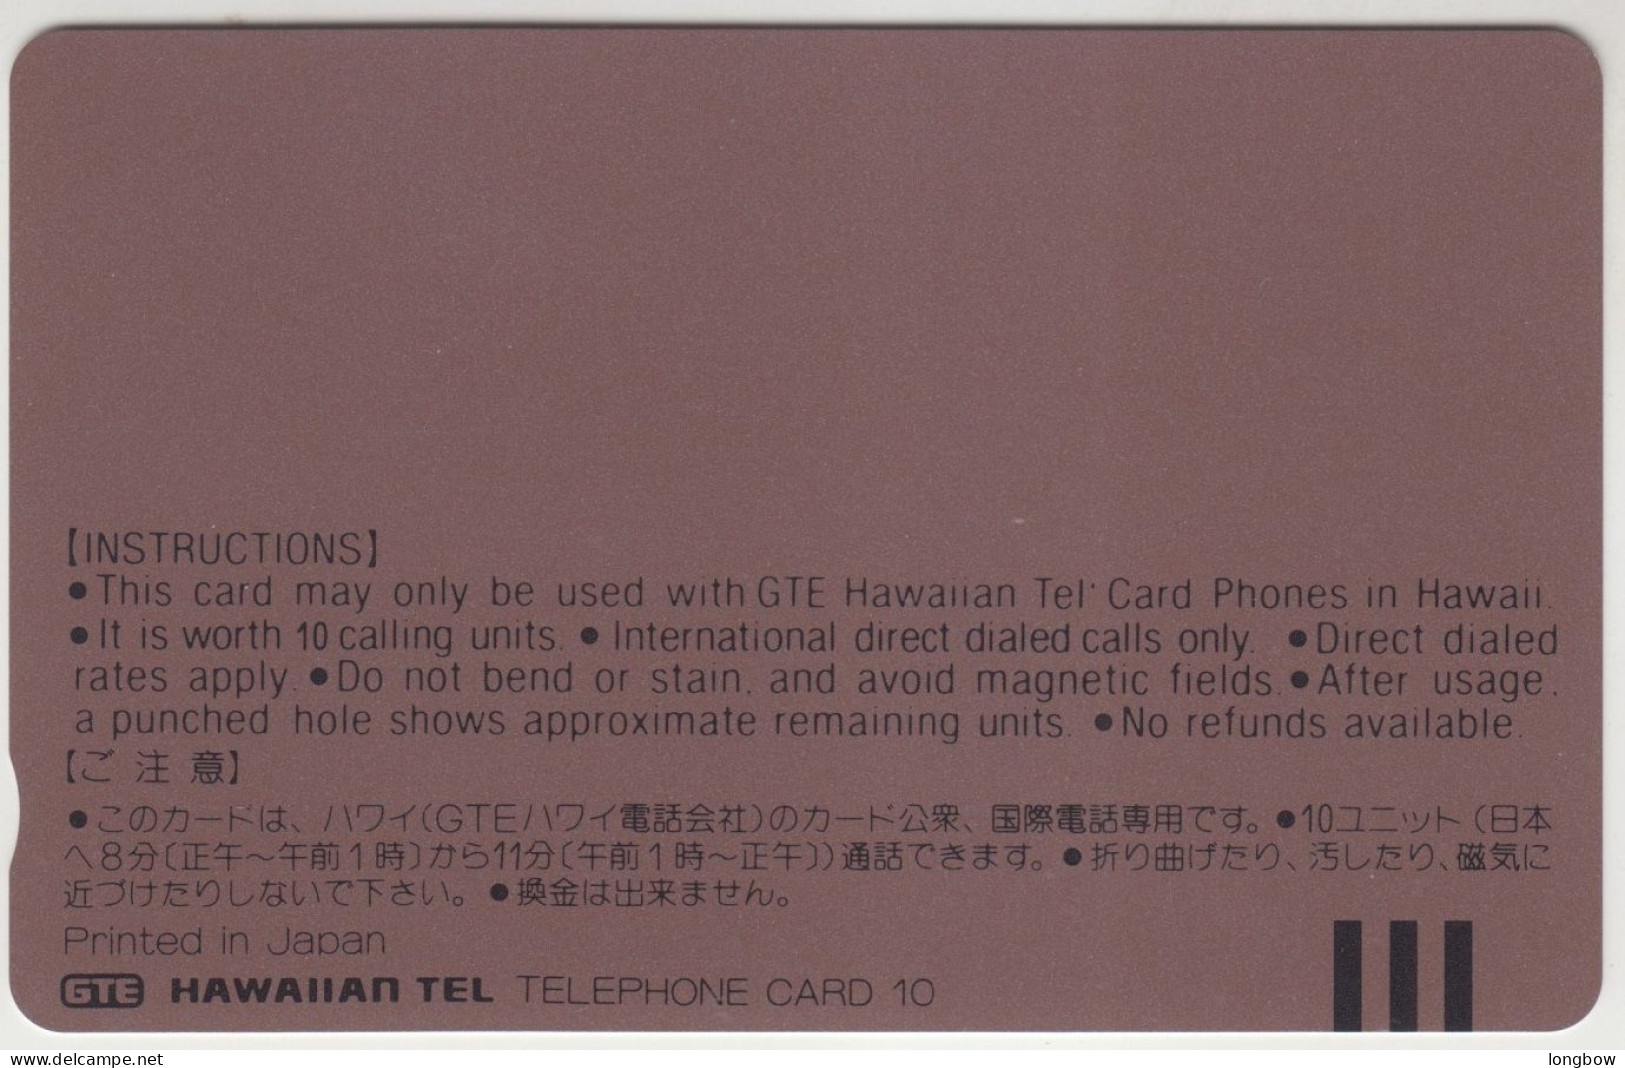 Hawaii Private Cards N°36 - 1995 Int.Symposium Japan America 2.000ex. Mint - Hawaï